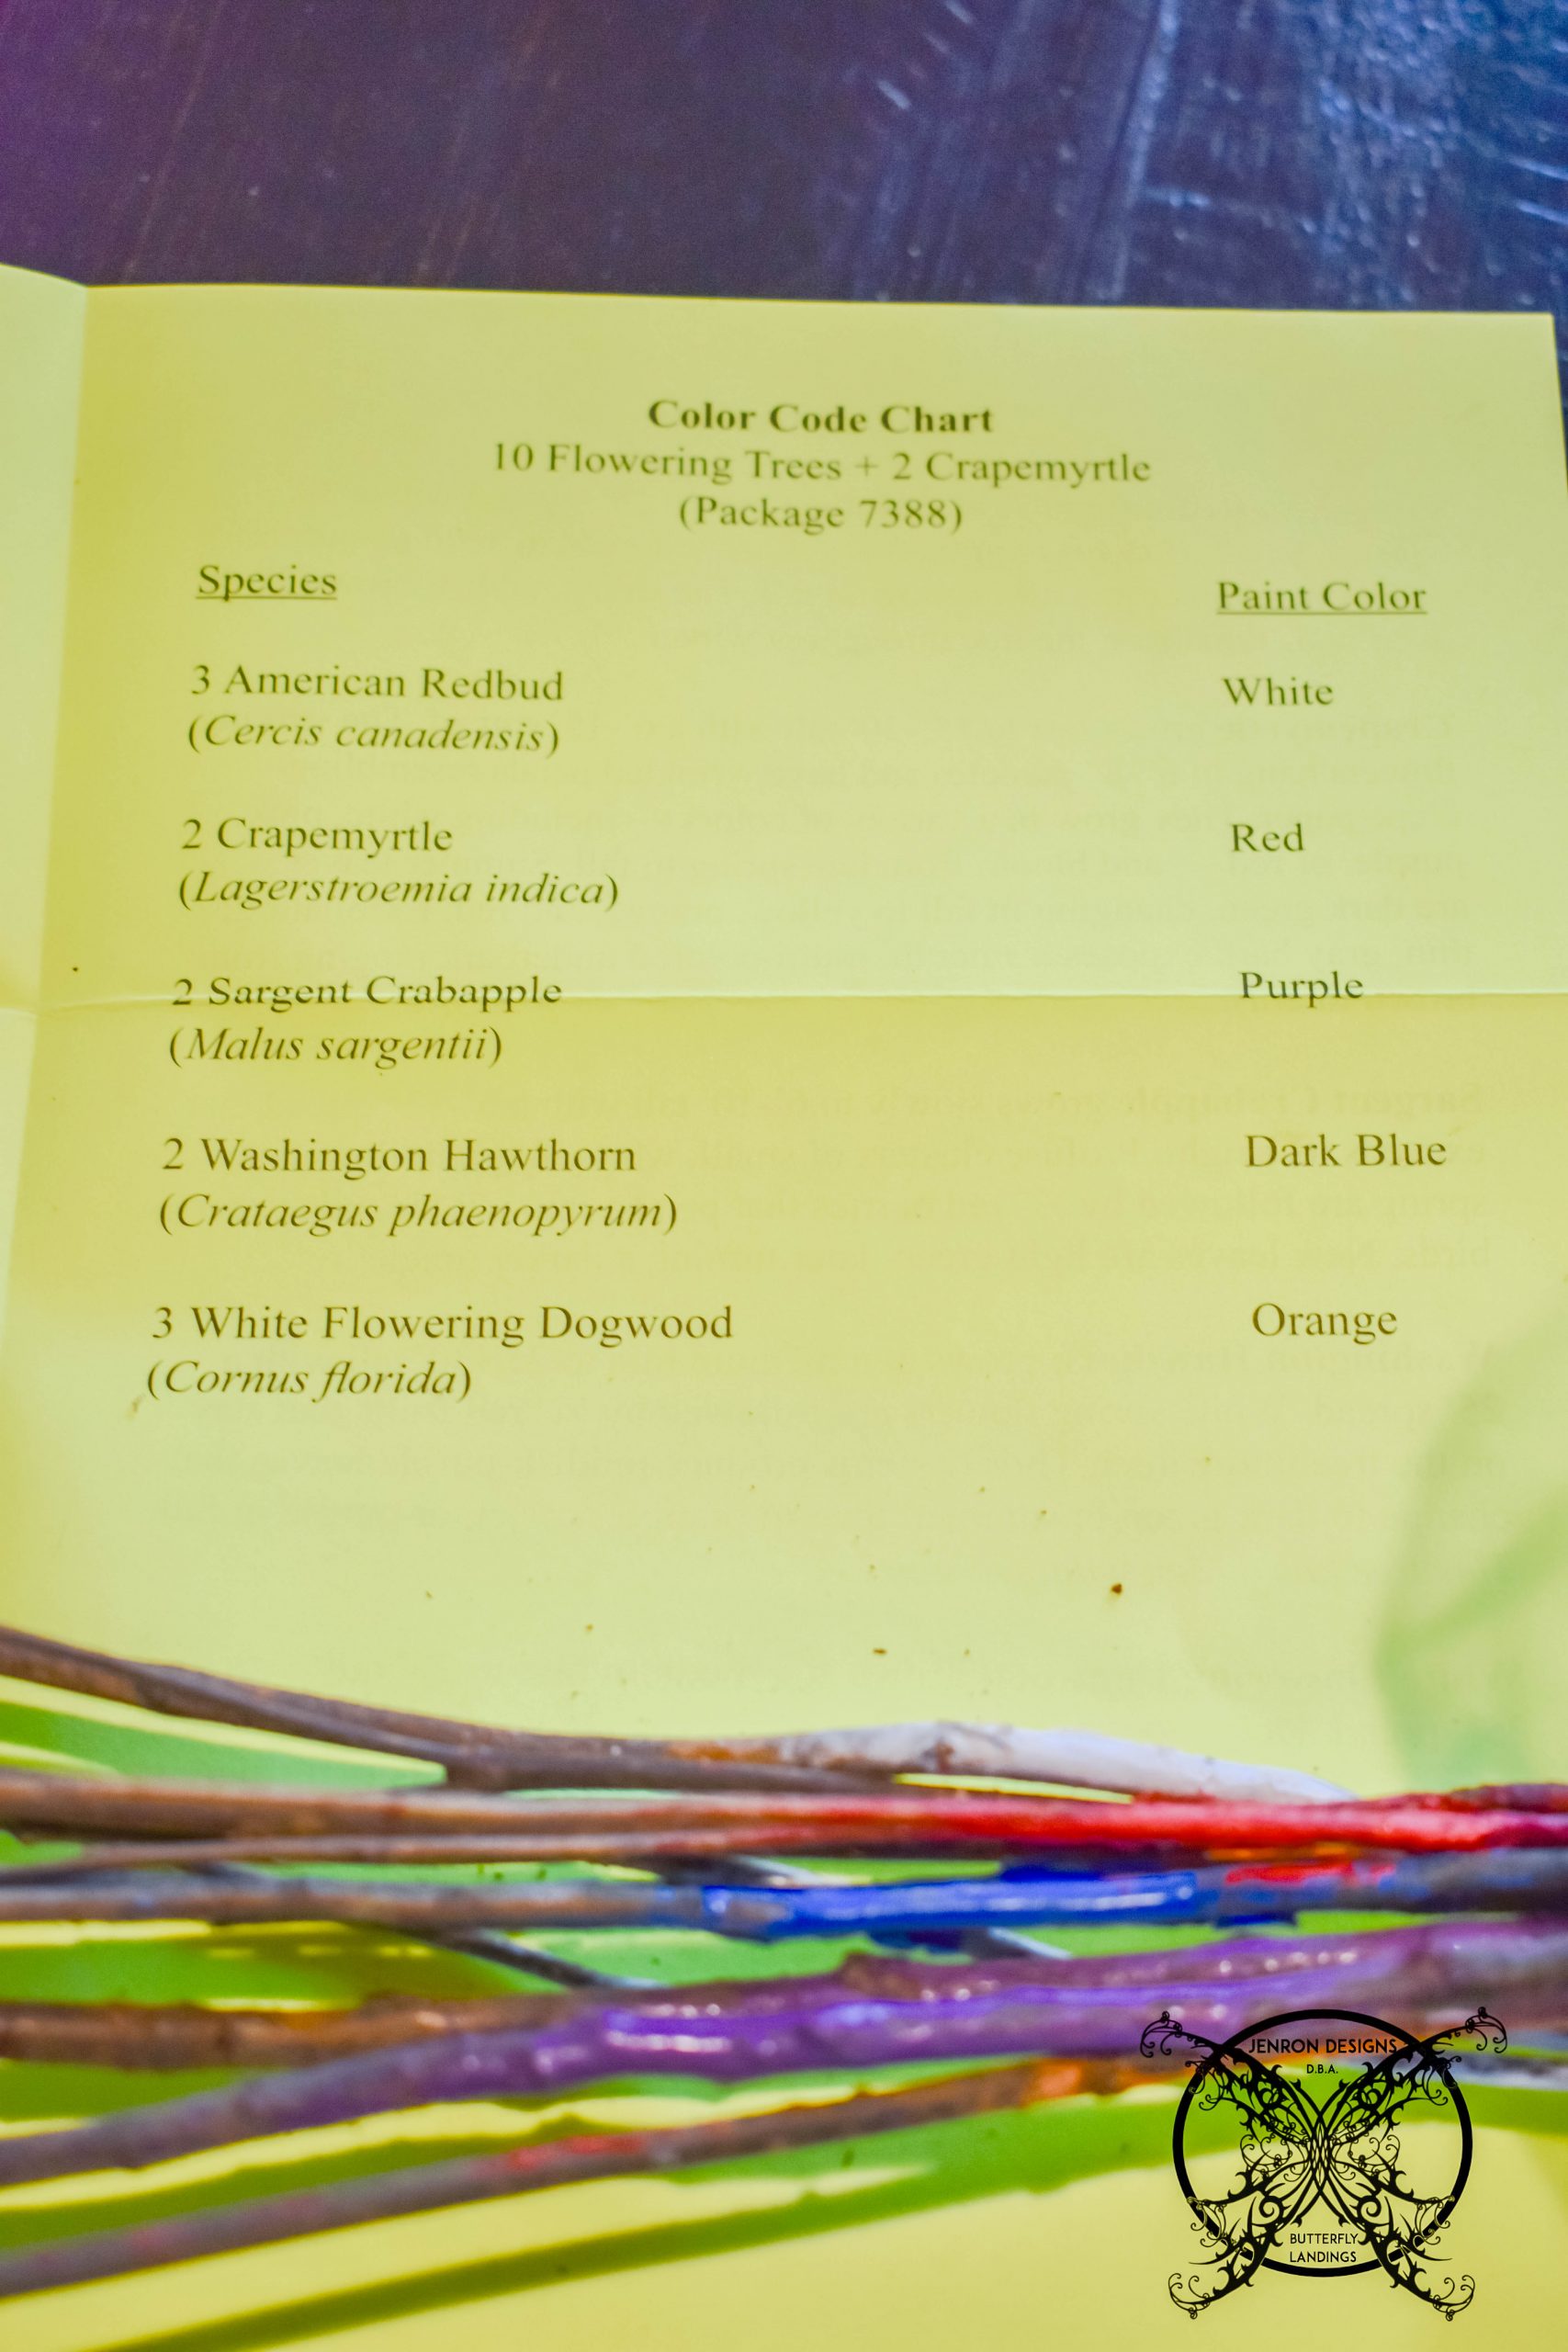 Colored Codes Baby Tree Arbor Foundation JENRON DESIGNS